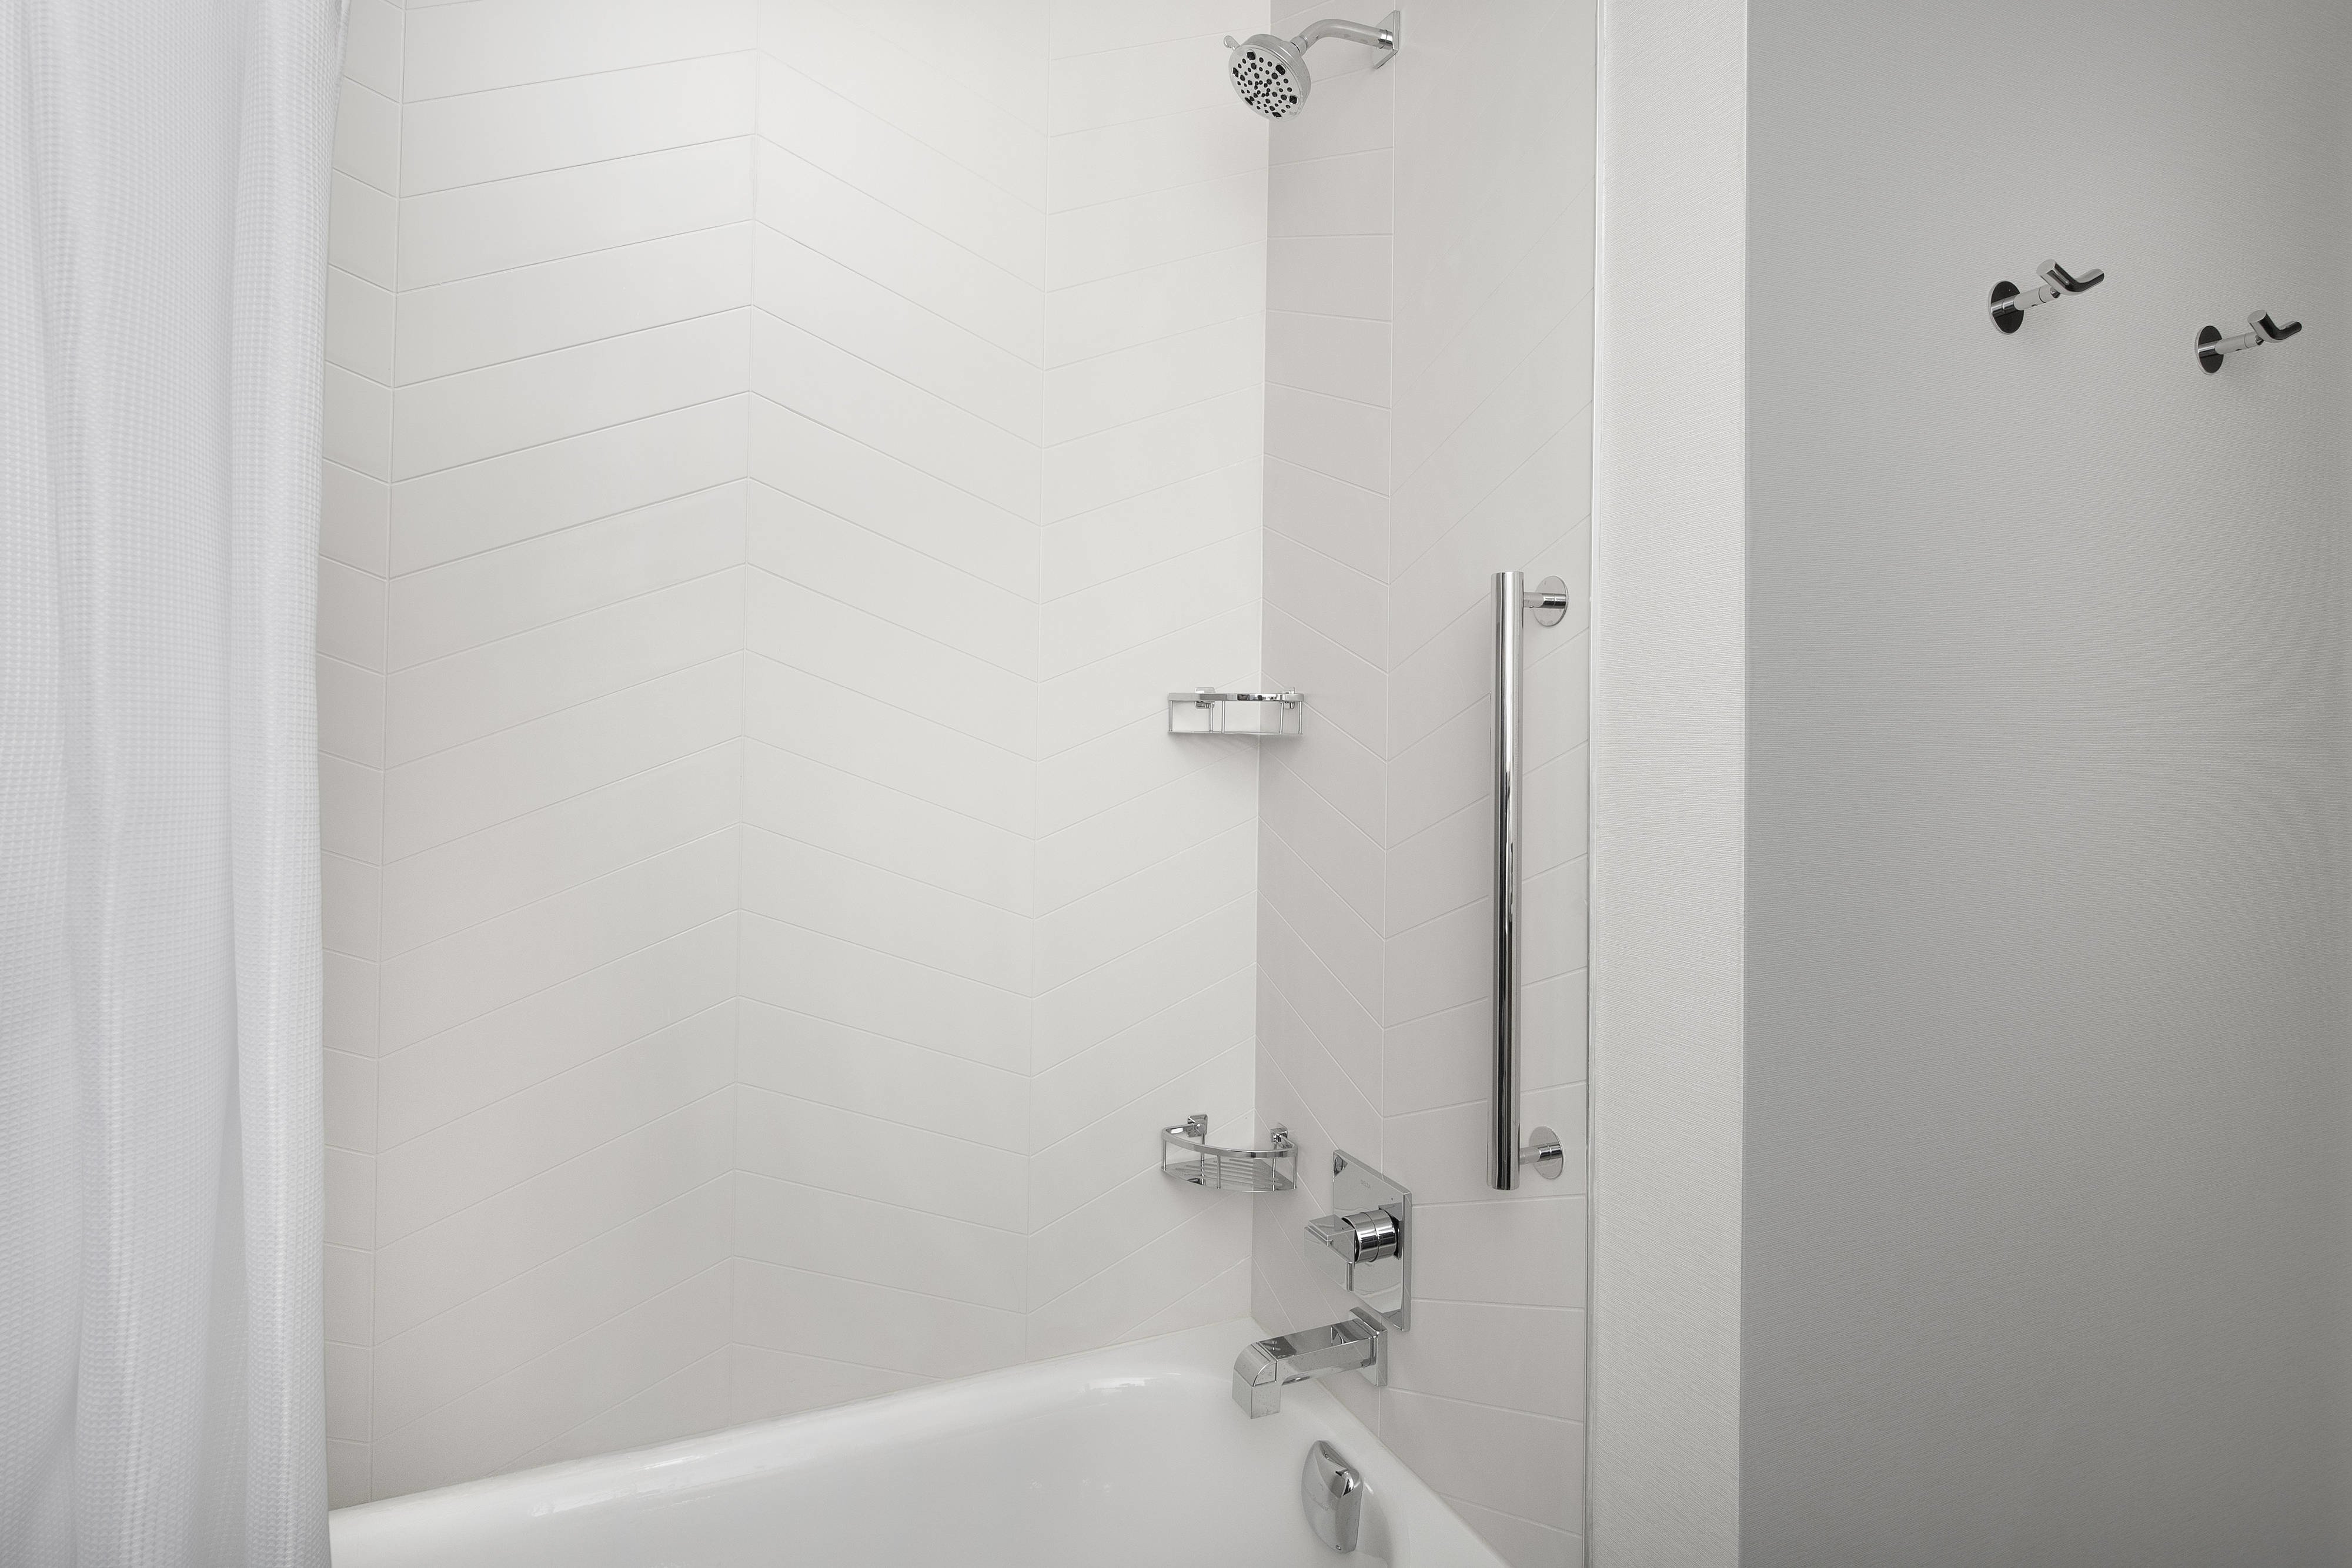 Guest Bathroom - Tub/Shower Combination